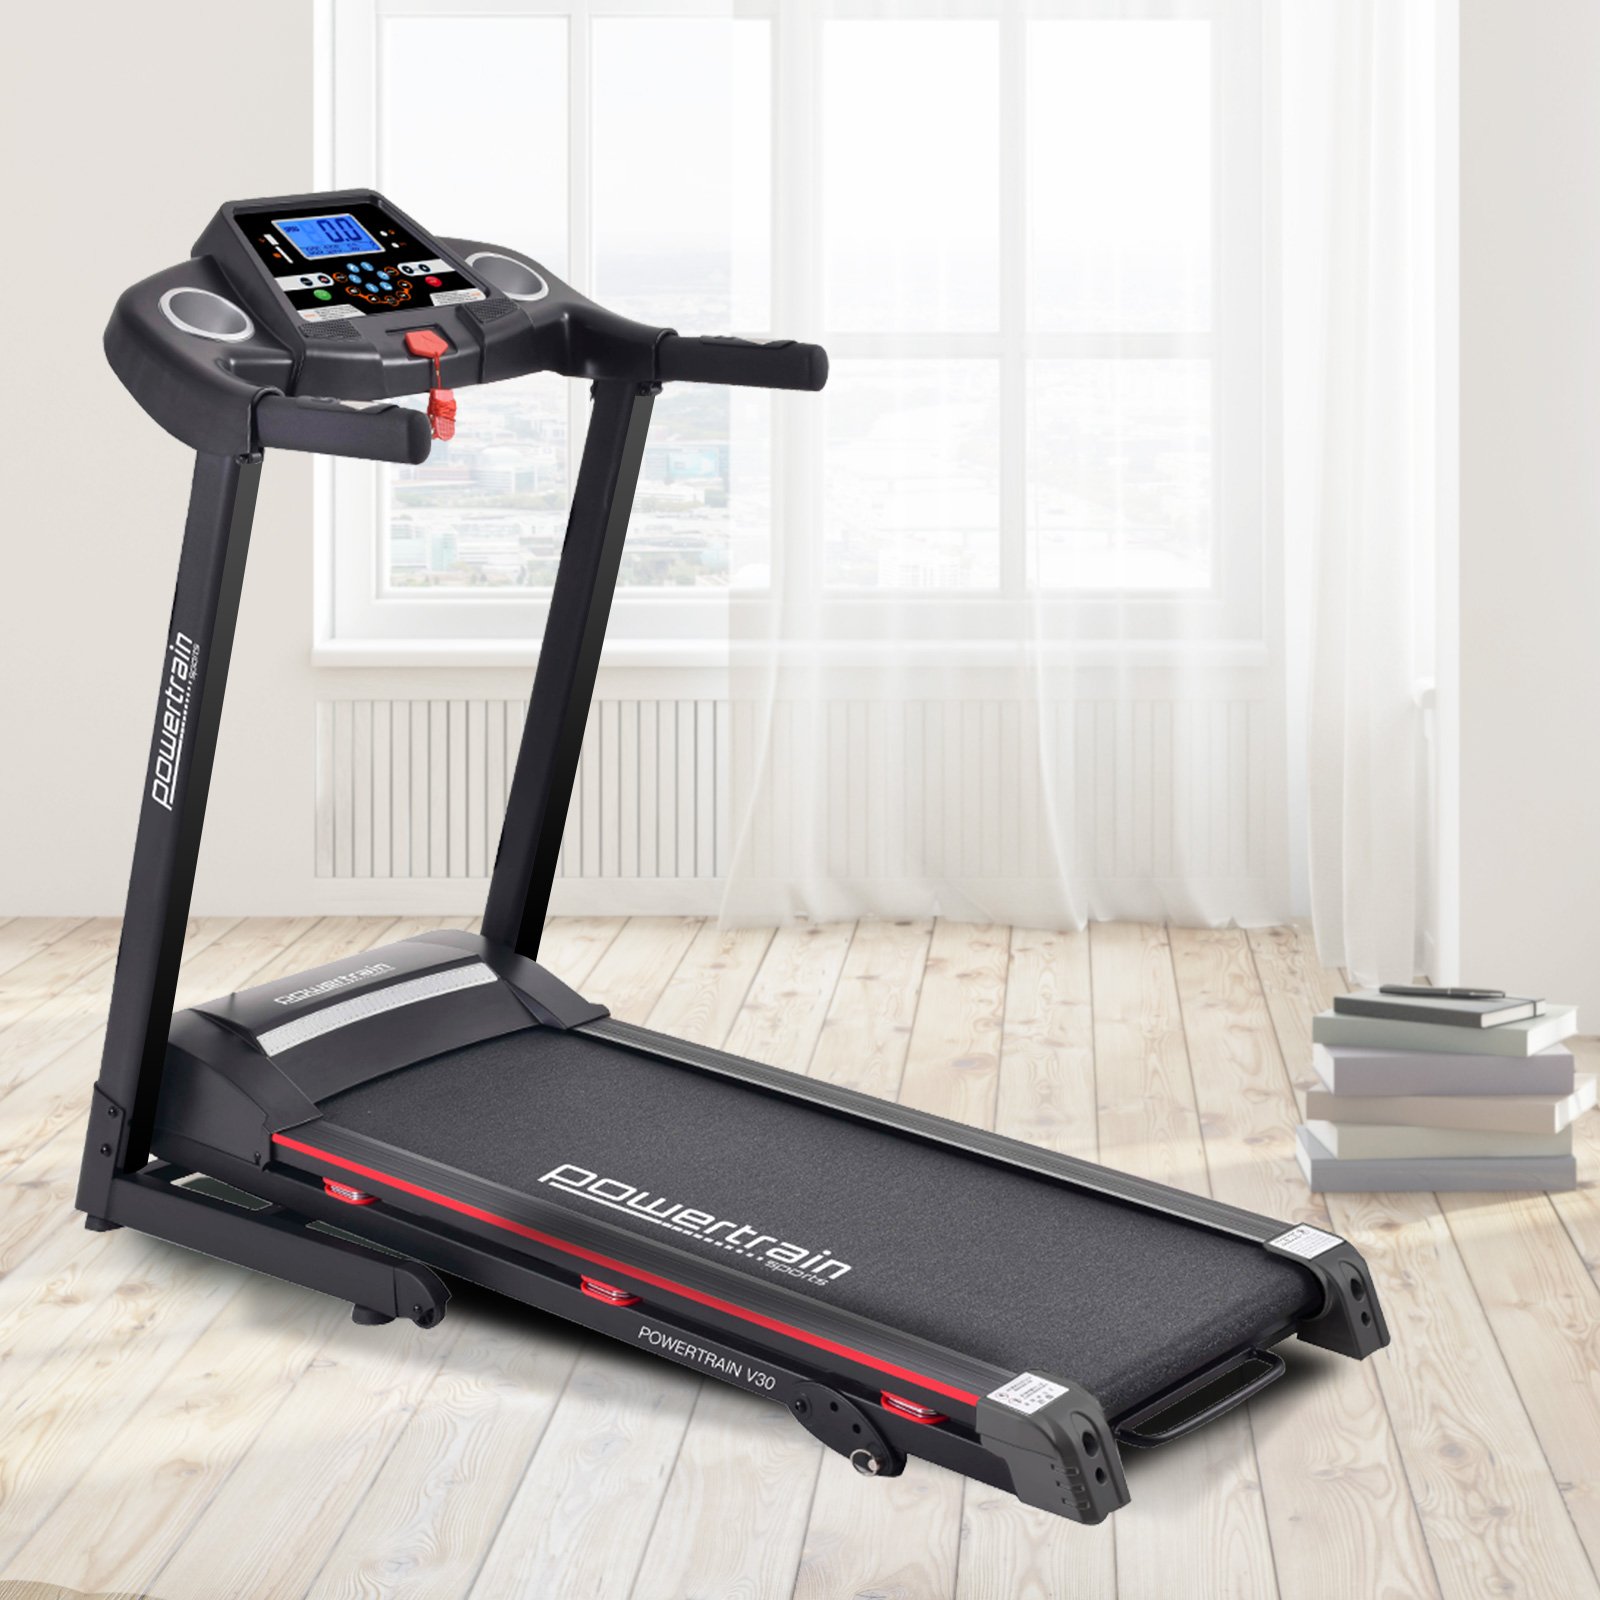 Powertrain V30 Foldable Treadmill Manual Incline Home Gym Cardio 2